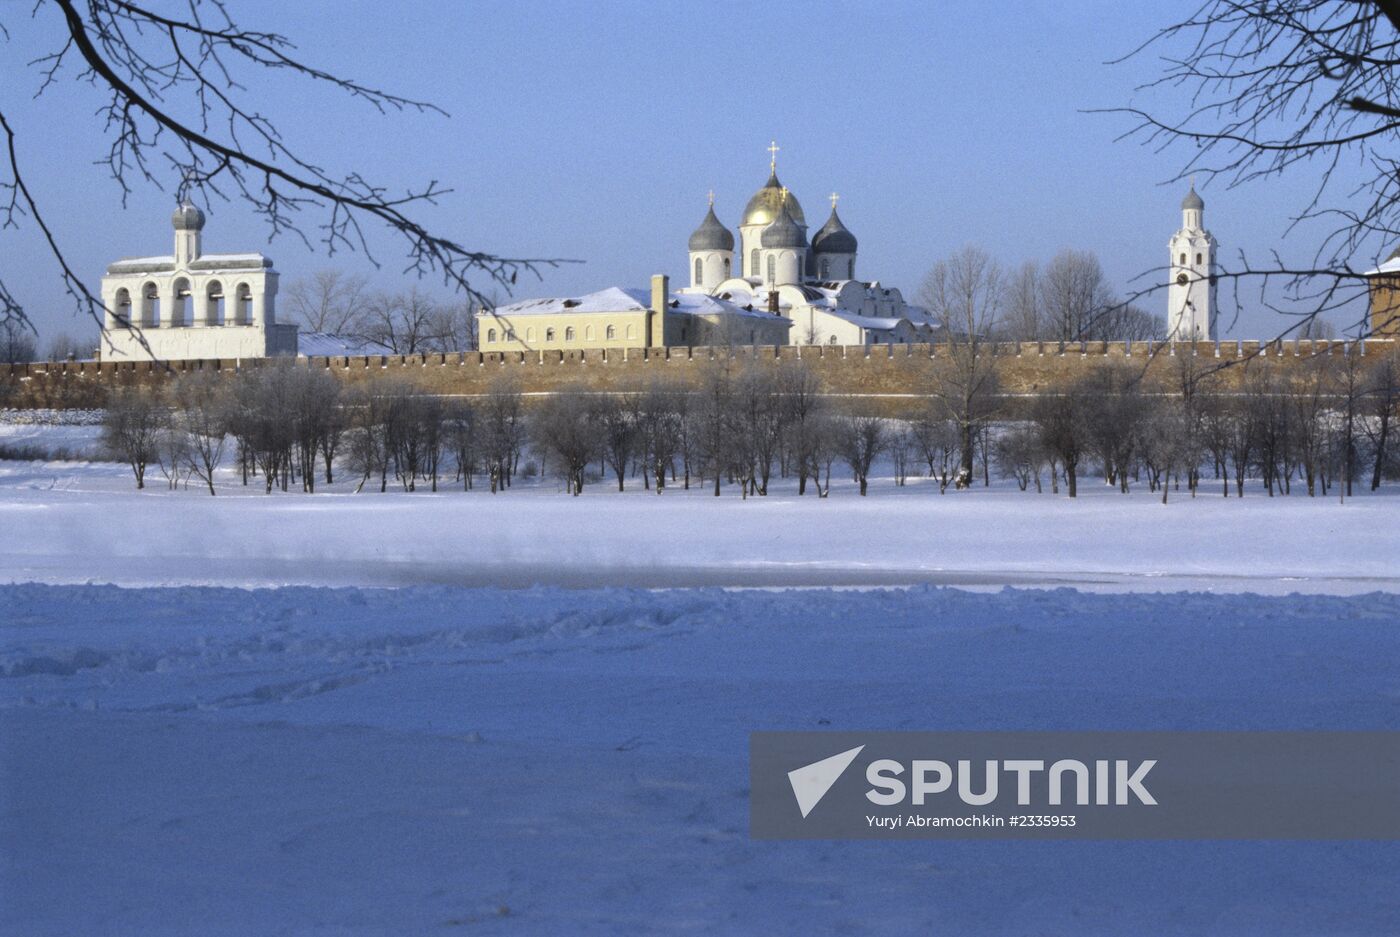 View of the Novgorod Kremlin